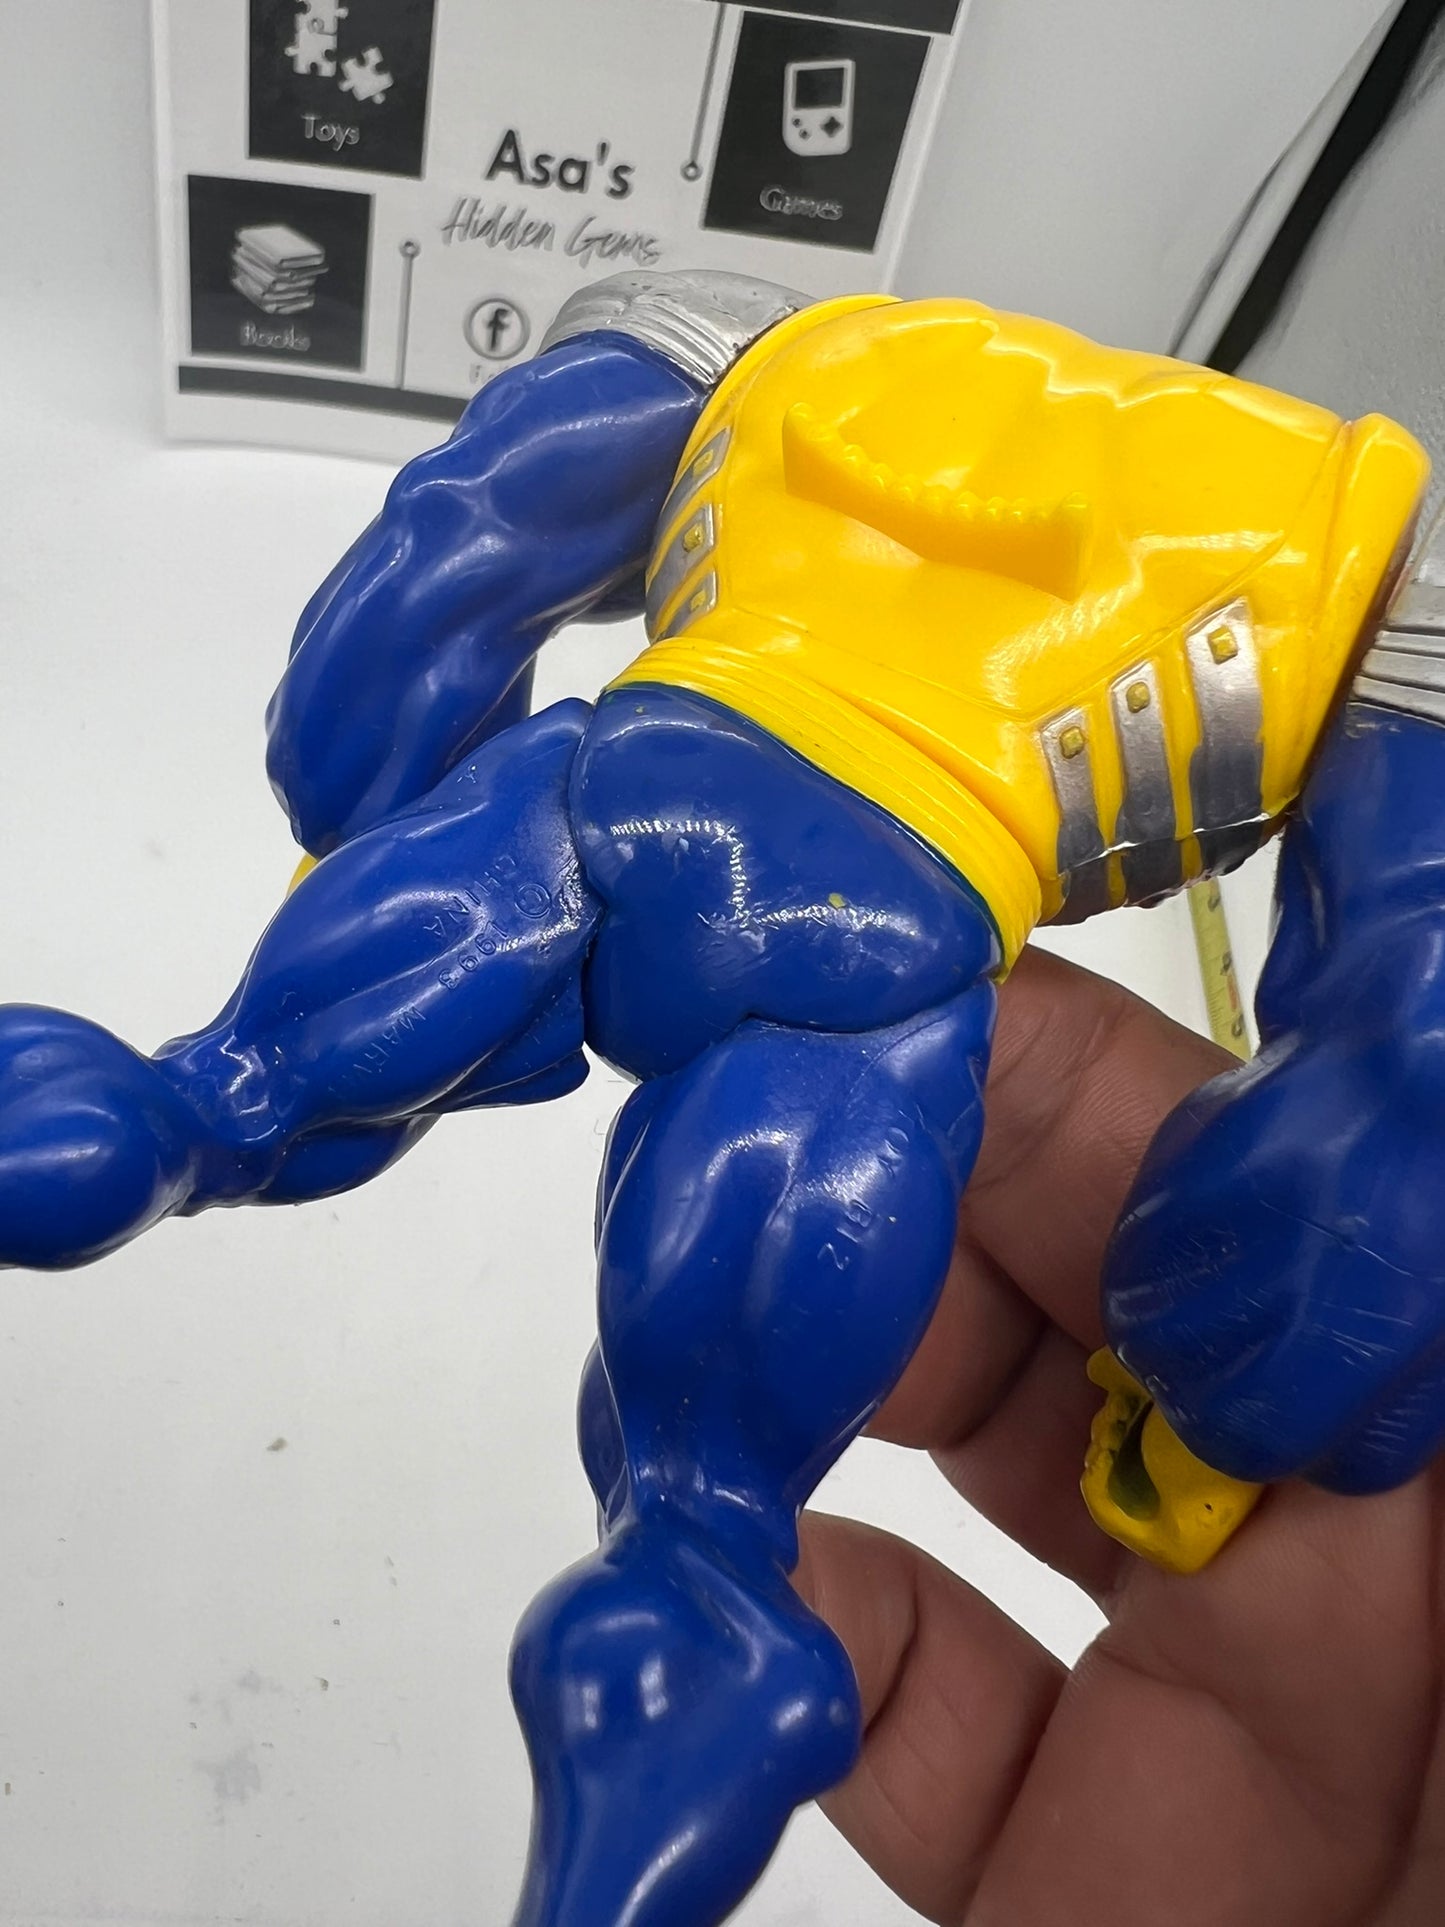 Marvel Toy Biz The Uncanny X-Men Strong Guy 1993 Action Figure X-factor Legends